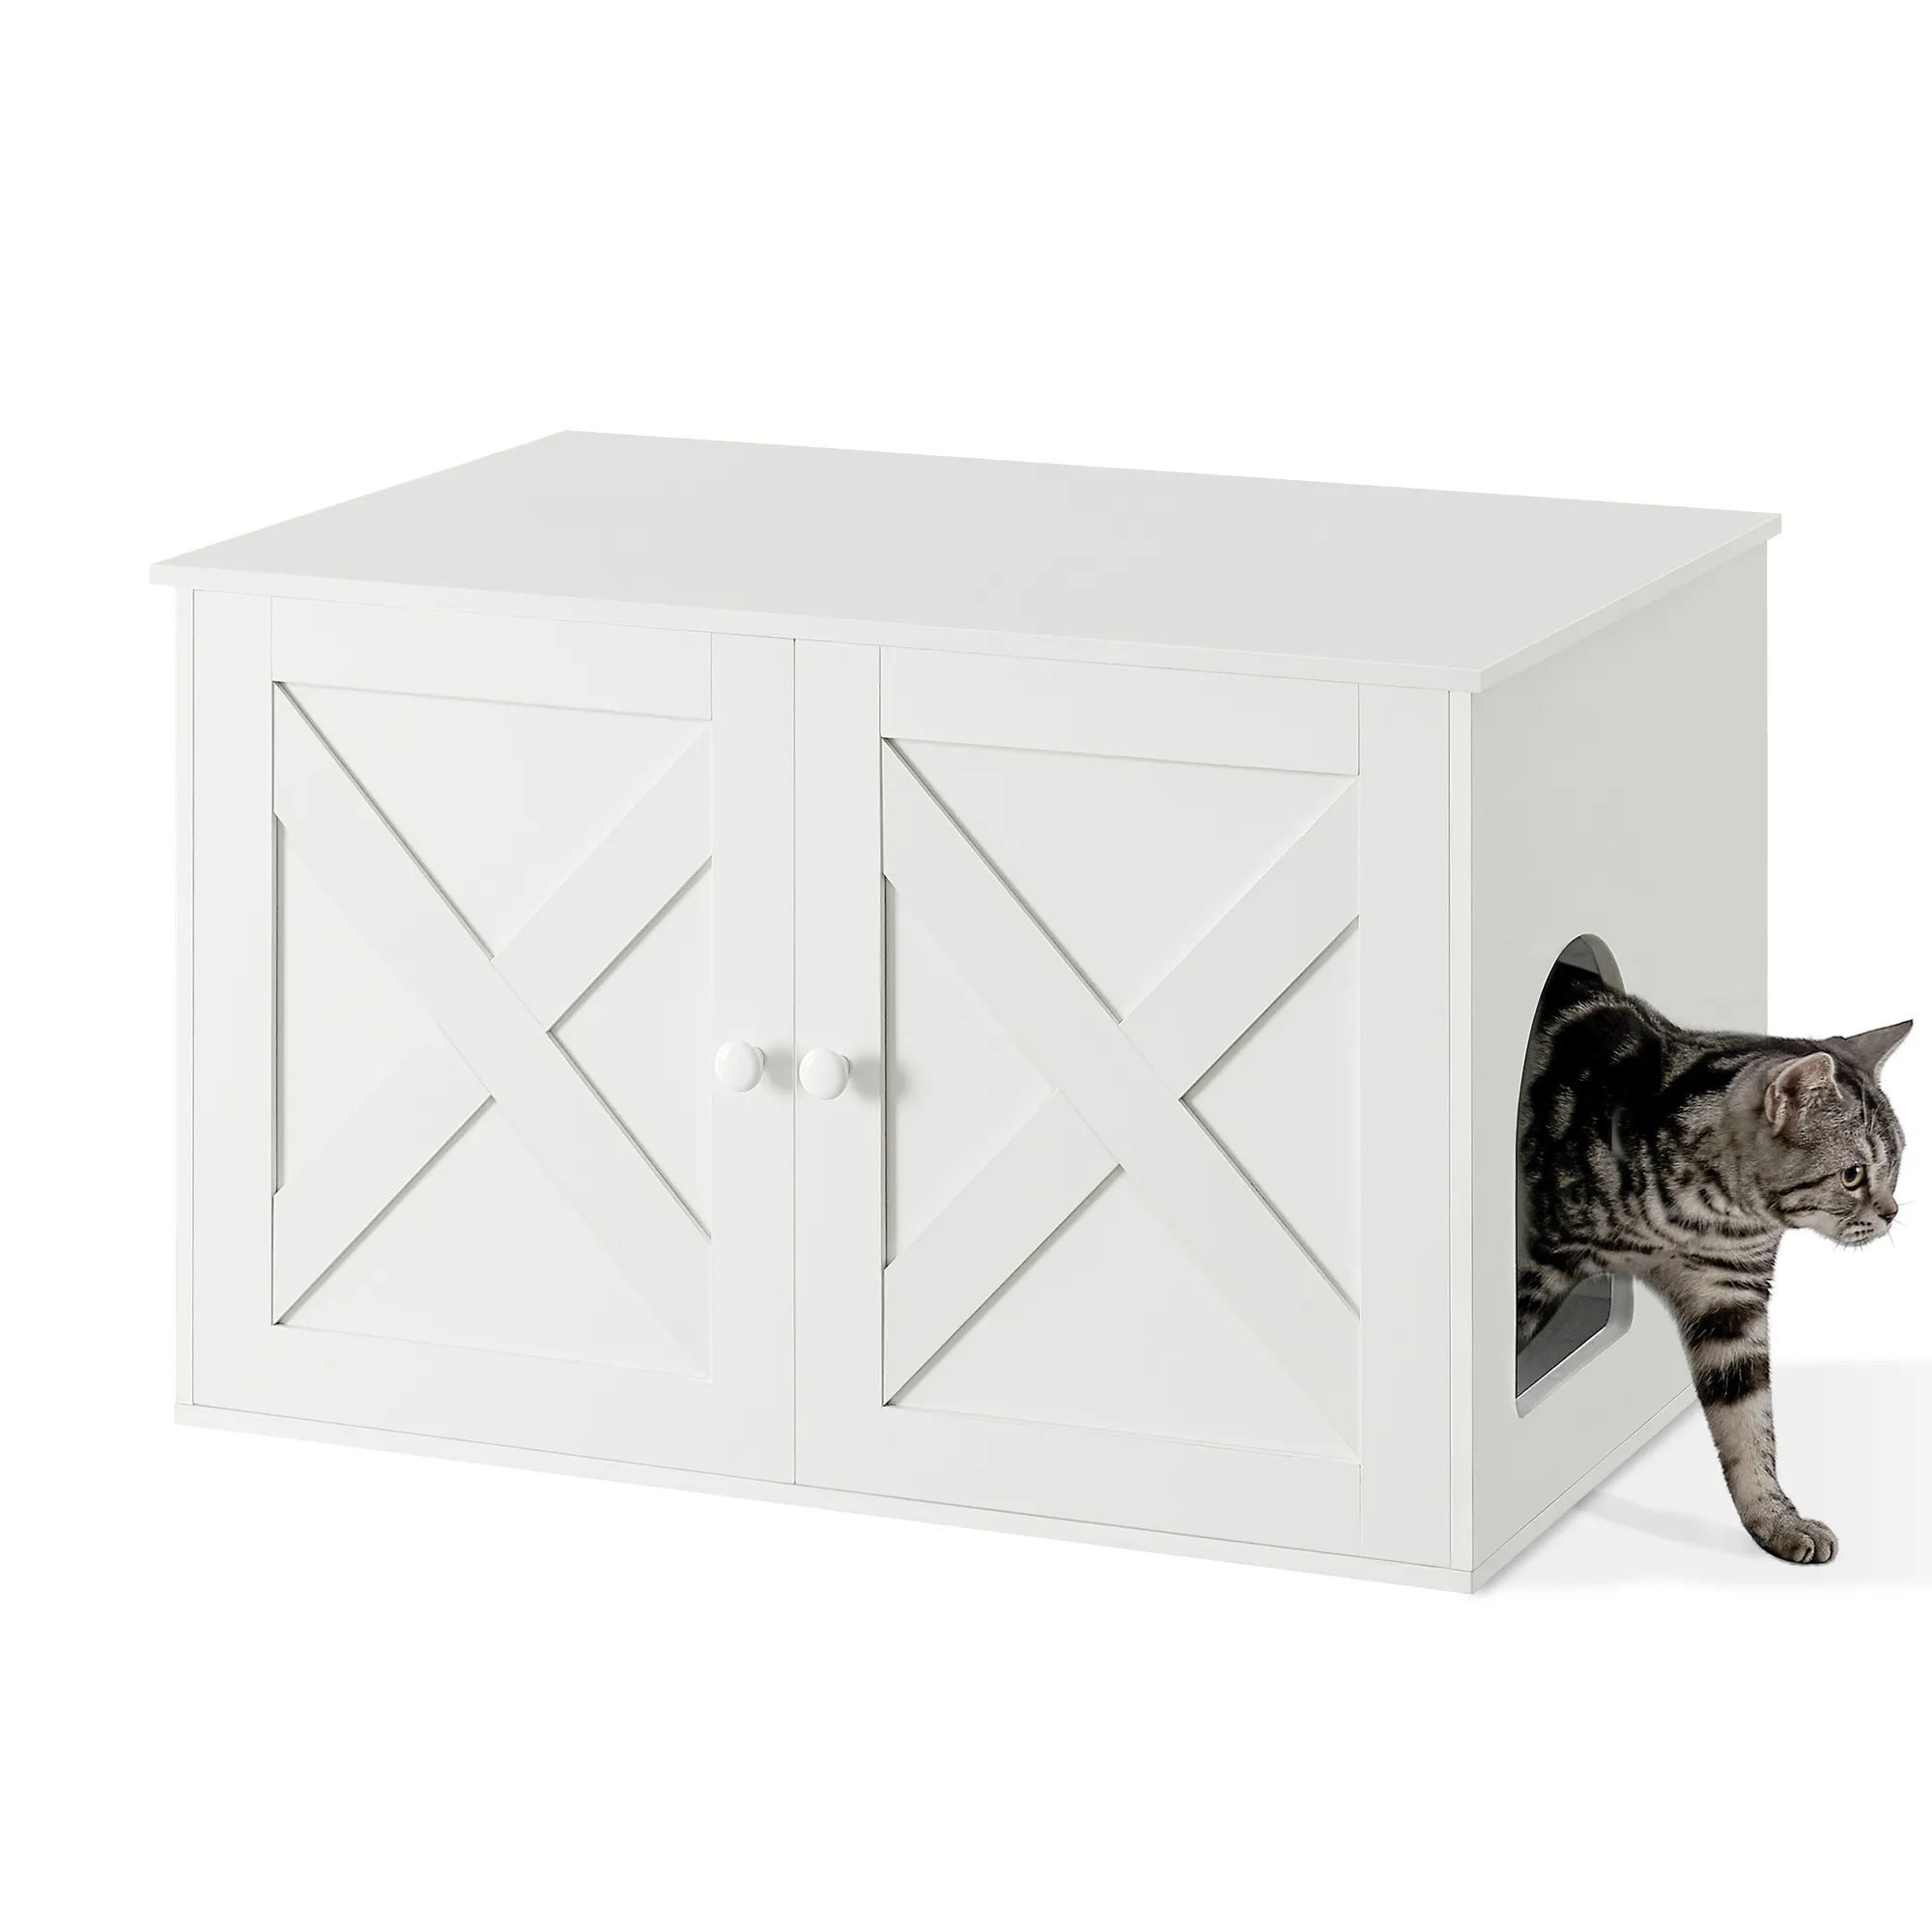 Feandrea Diseño moderno Muebles para mascotas Casa de madera para gatos Cajas de arena para gatos